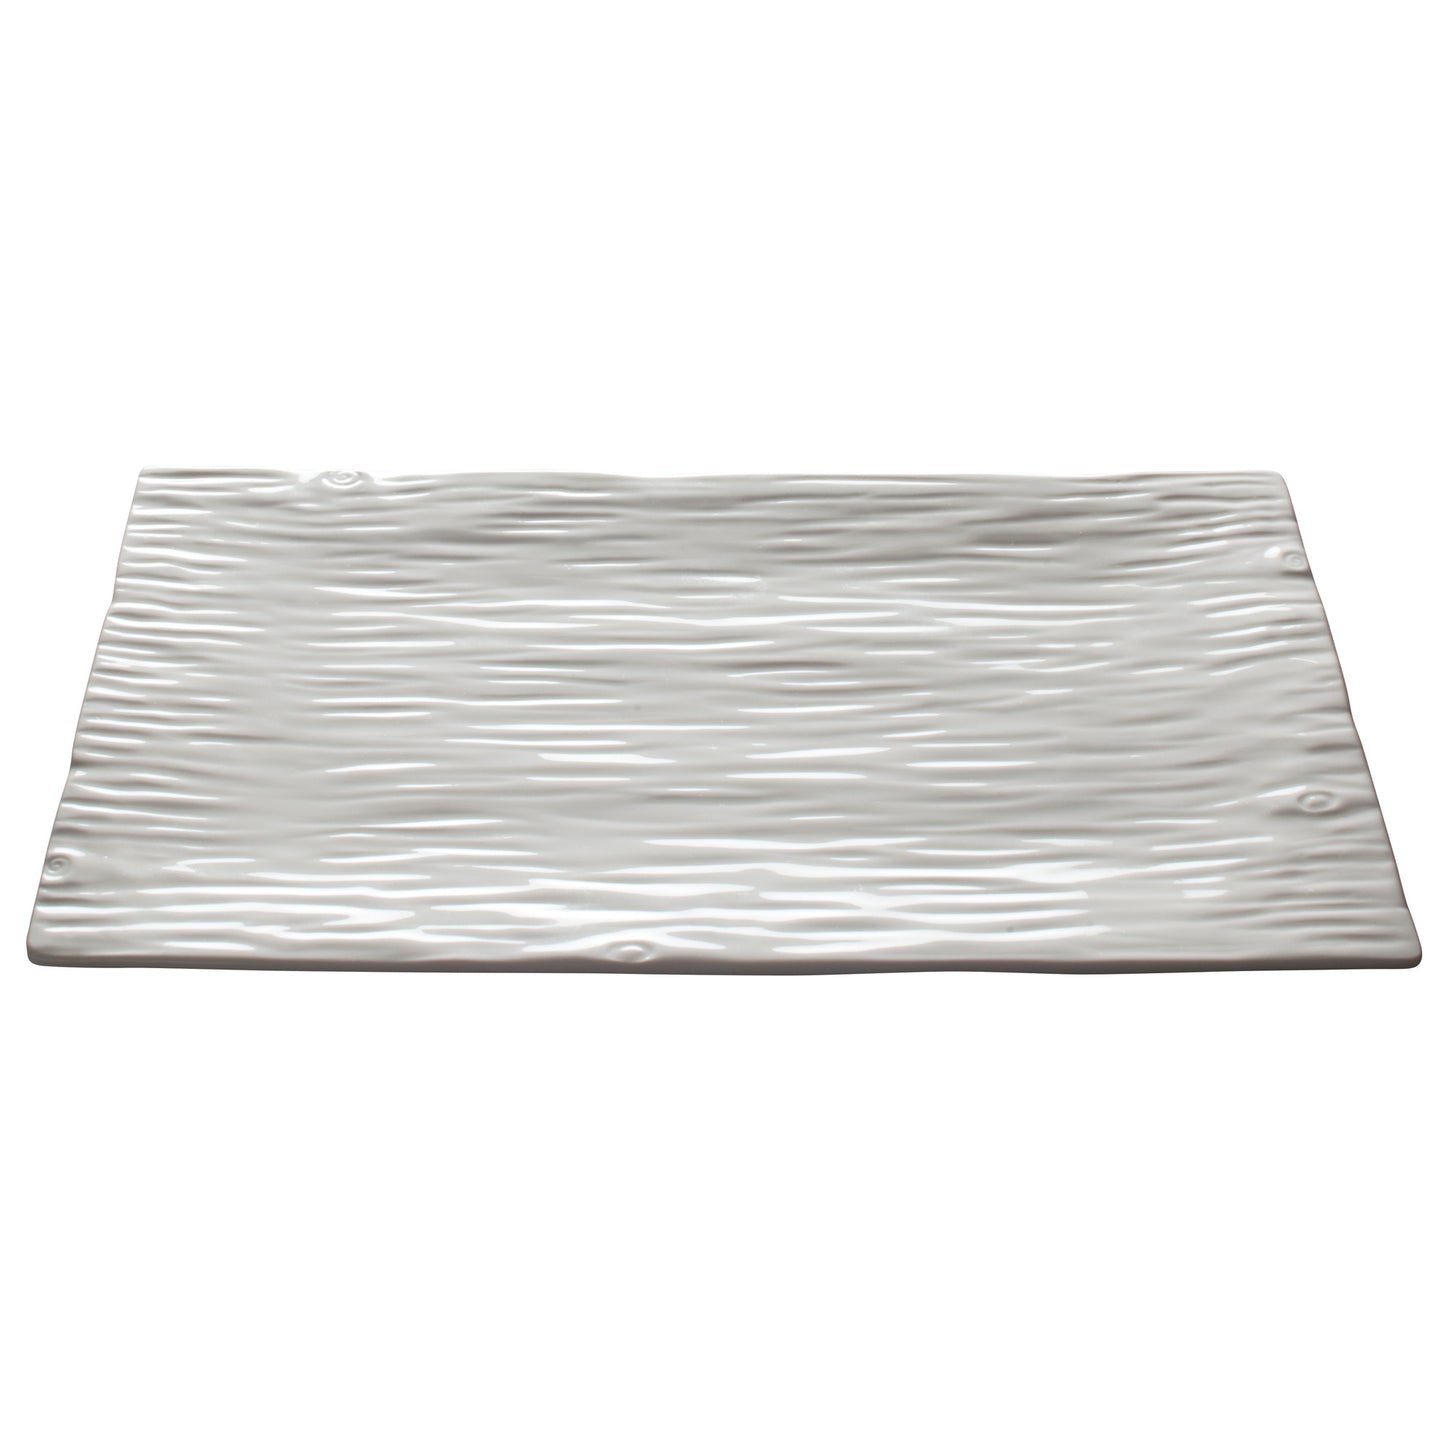 WDP002-203 - Dalmata Porcelain Rectangular Platter, Creamy White - 15-3/4"